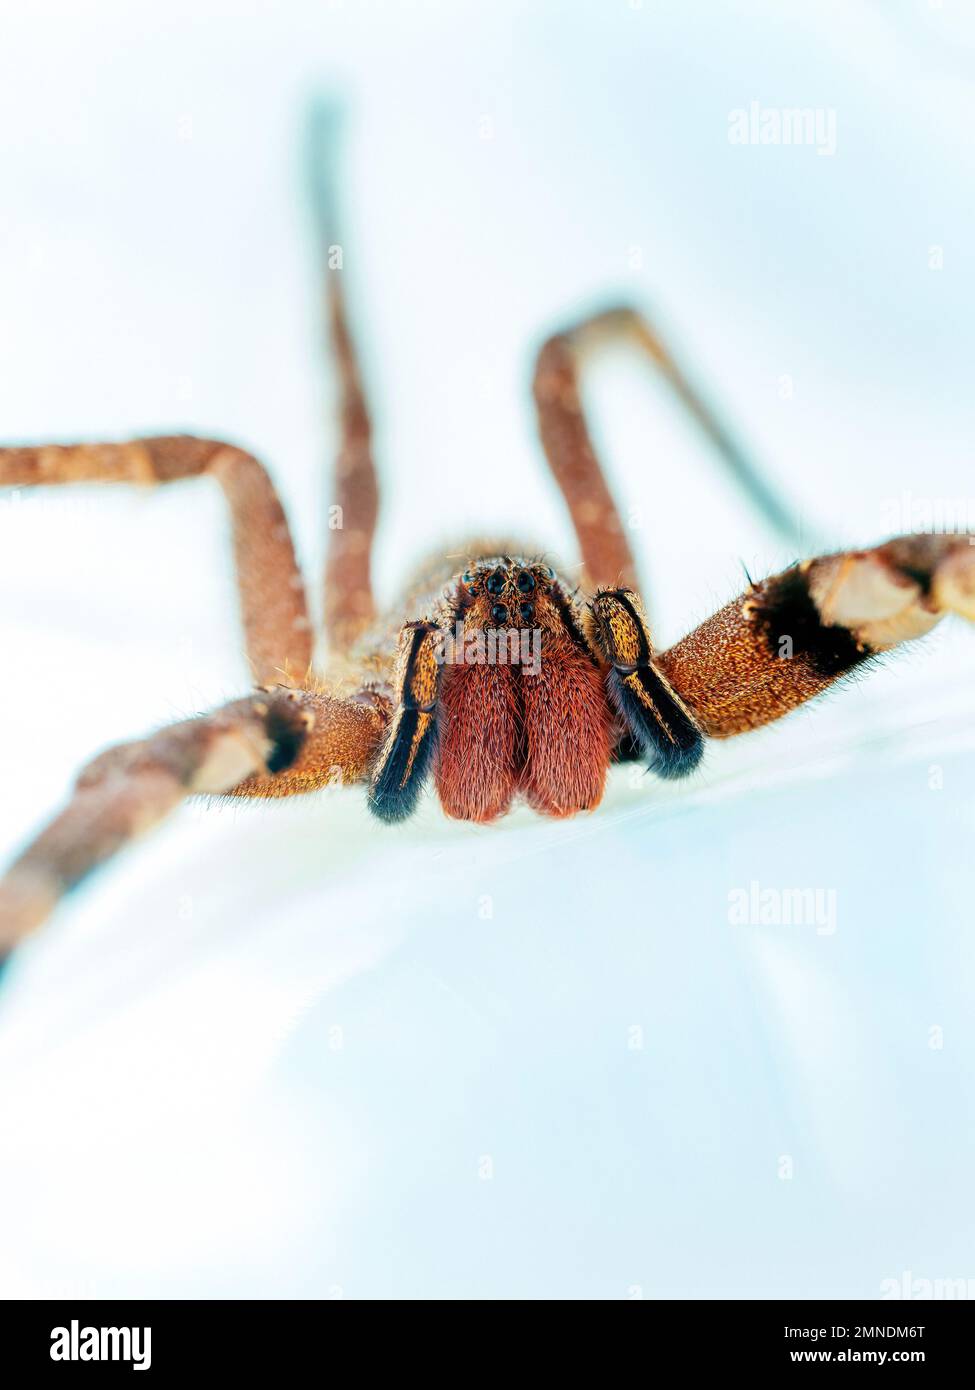 A banana spider (brazilian wandering spider, aranha armadeira, Phoneutria) on white background, dangerous species famous for venomous bites. Stock Photo